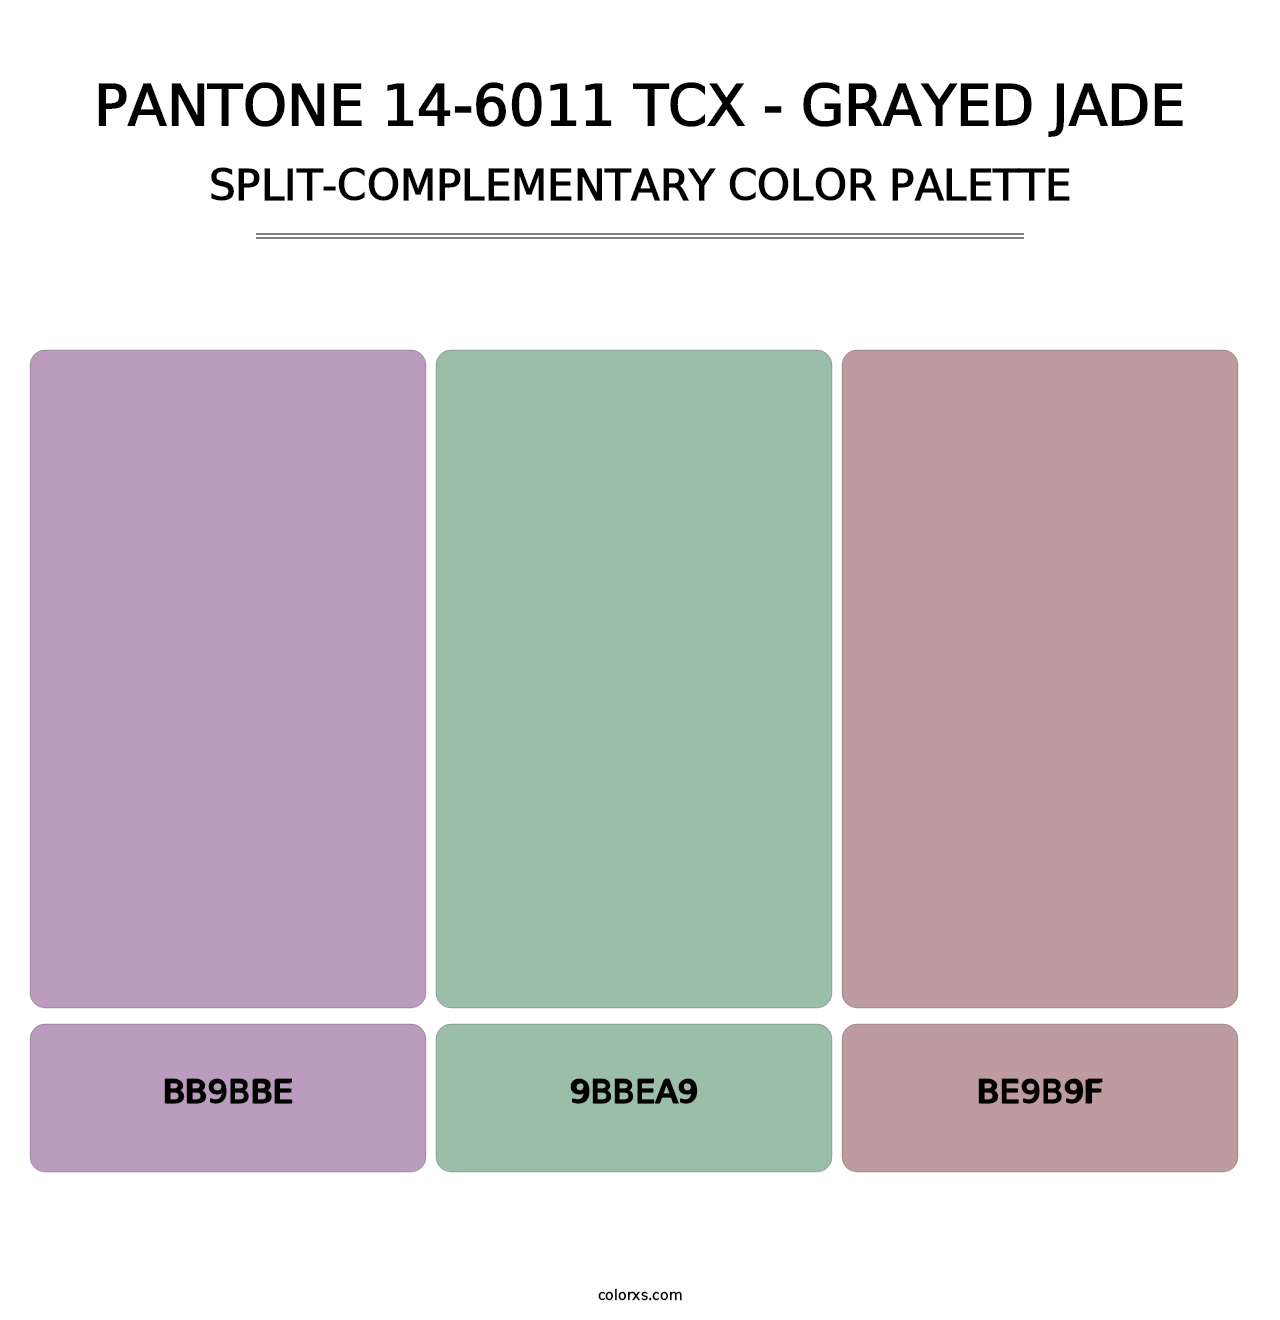 PANTONE 14-6011 TCX - Grayed Jade - Split-Complementary Color Palette